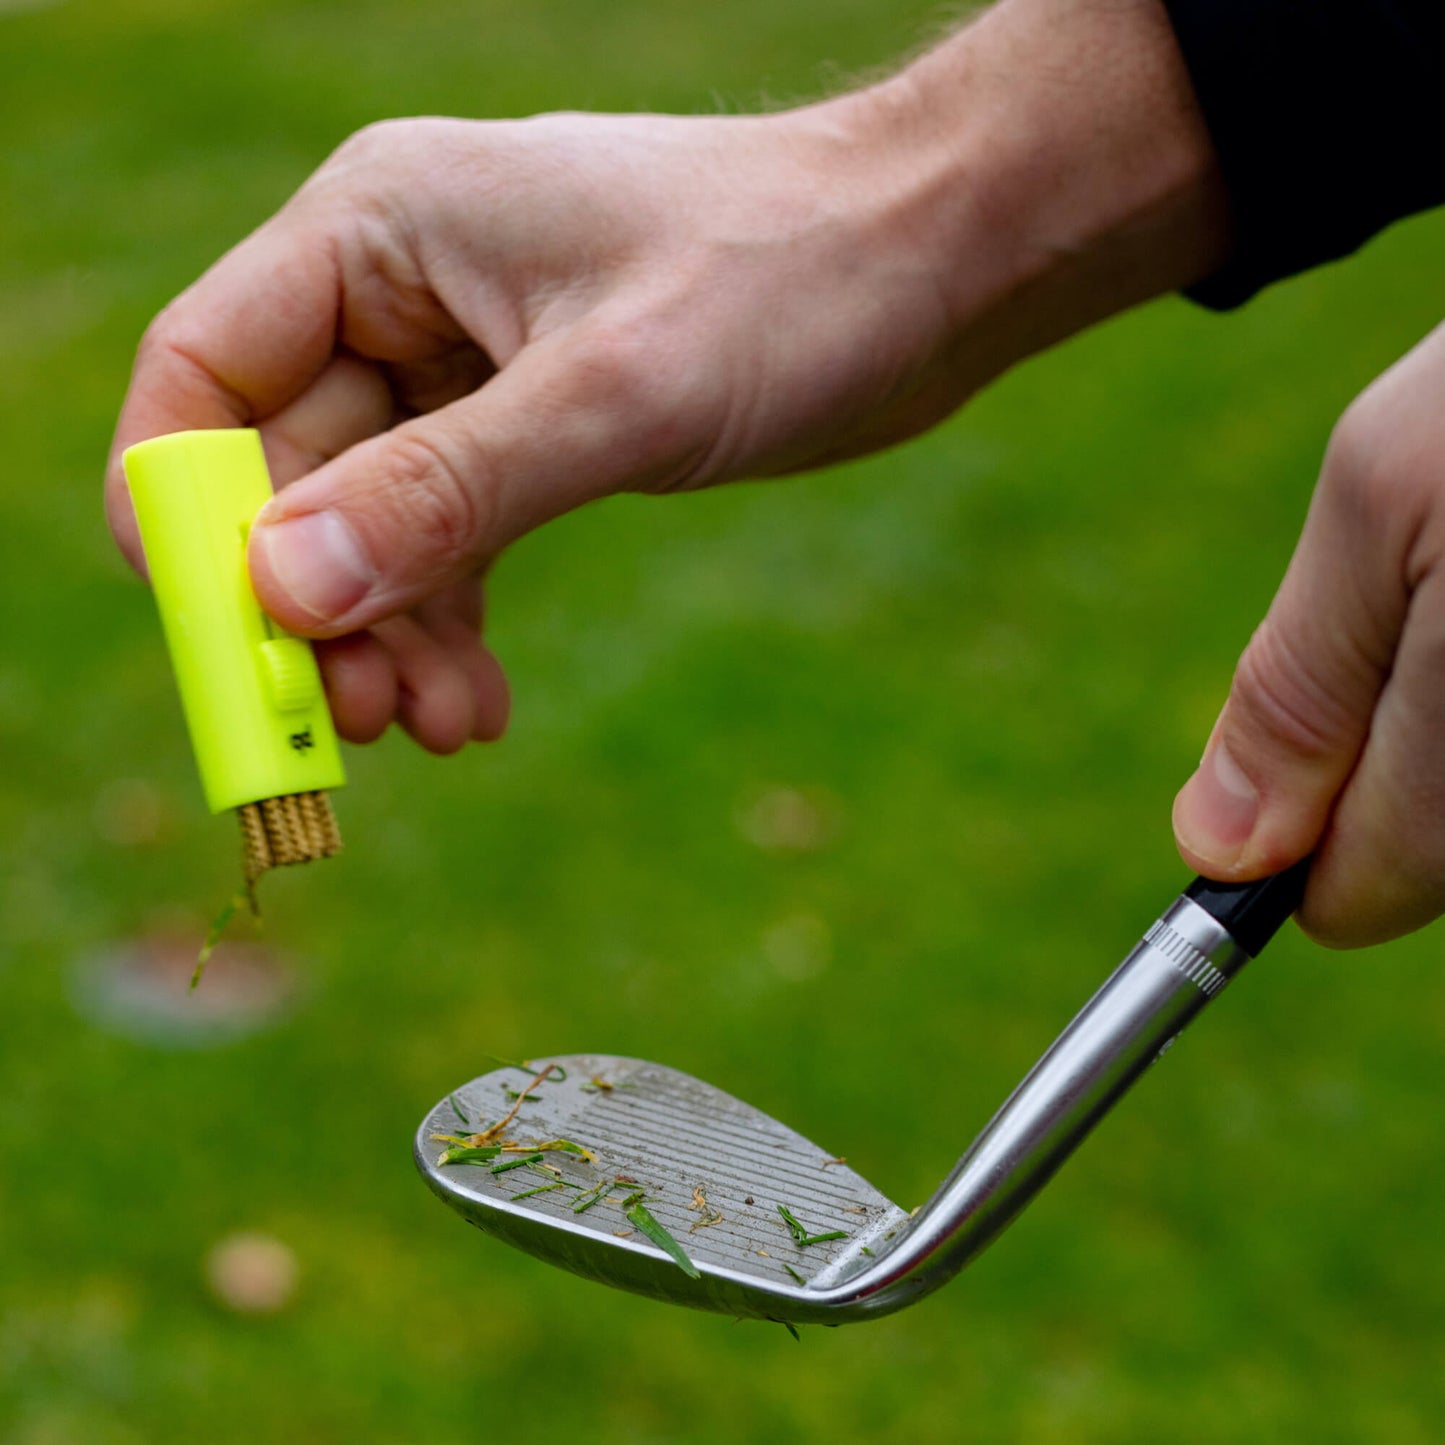 Pocket Brush Golf Club Cleaner Neon